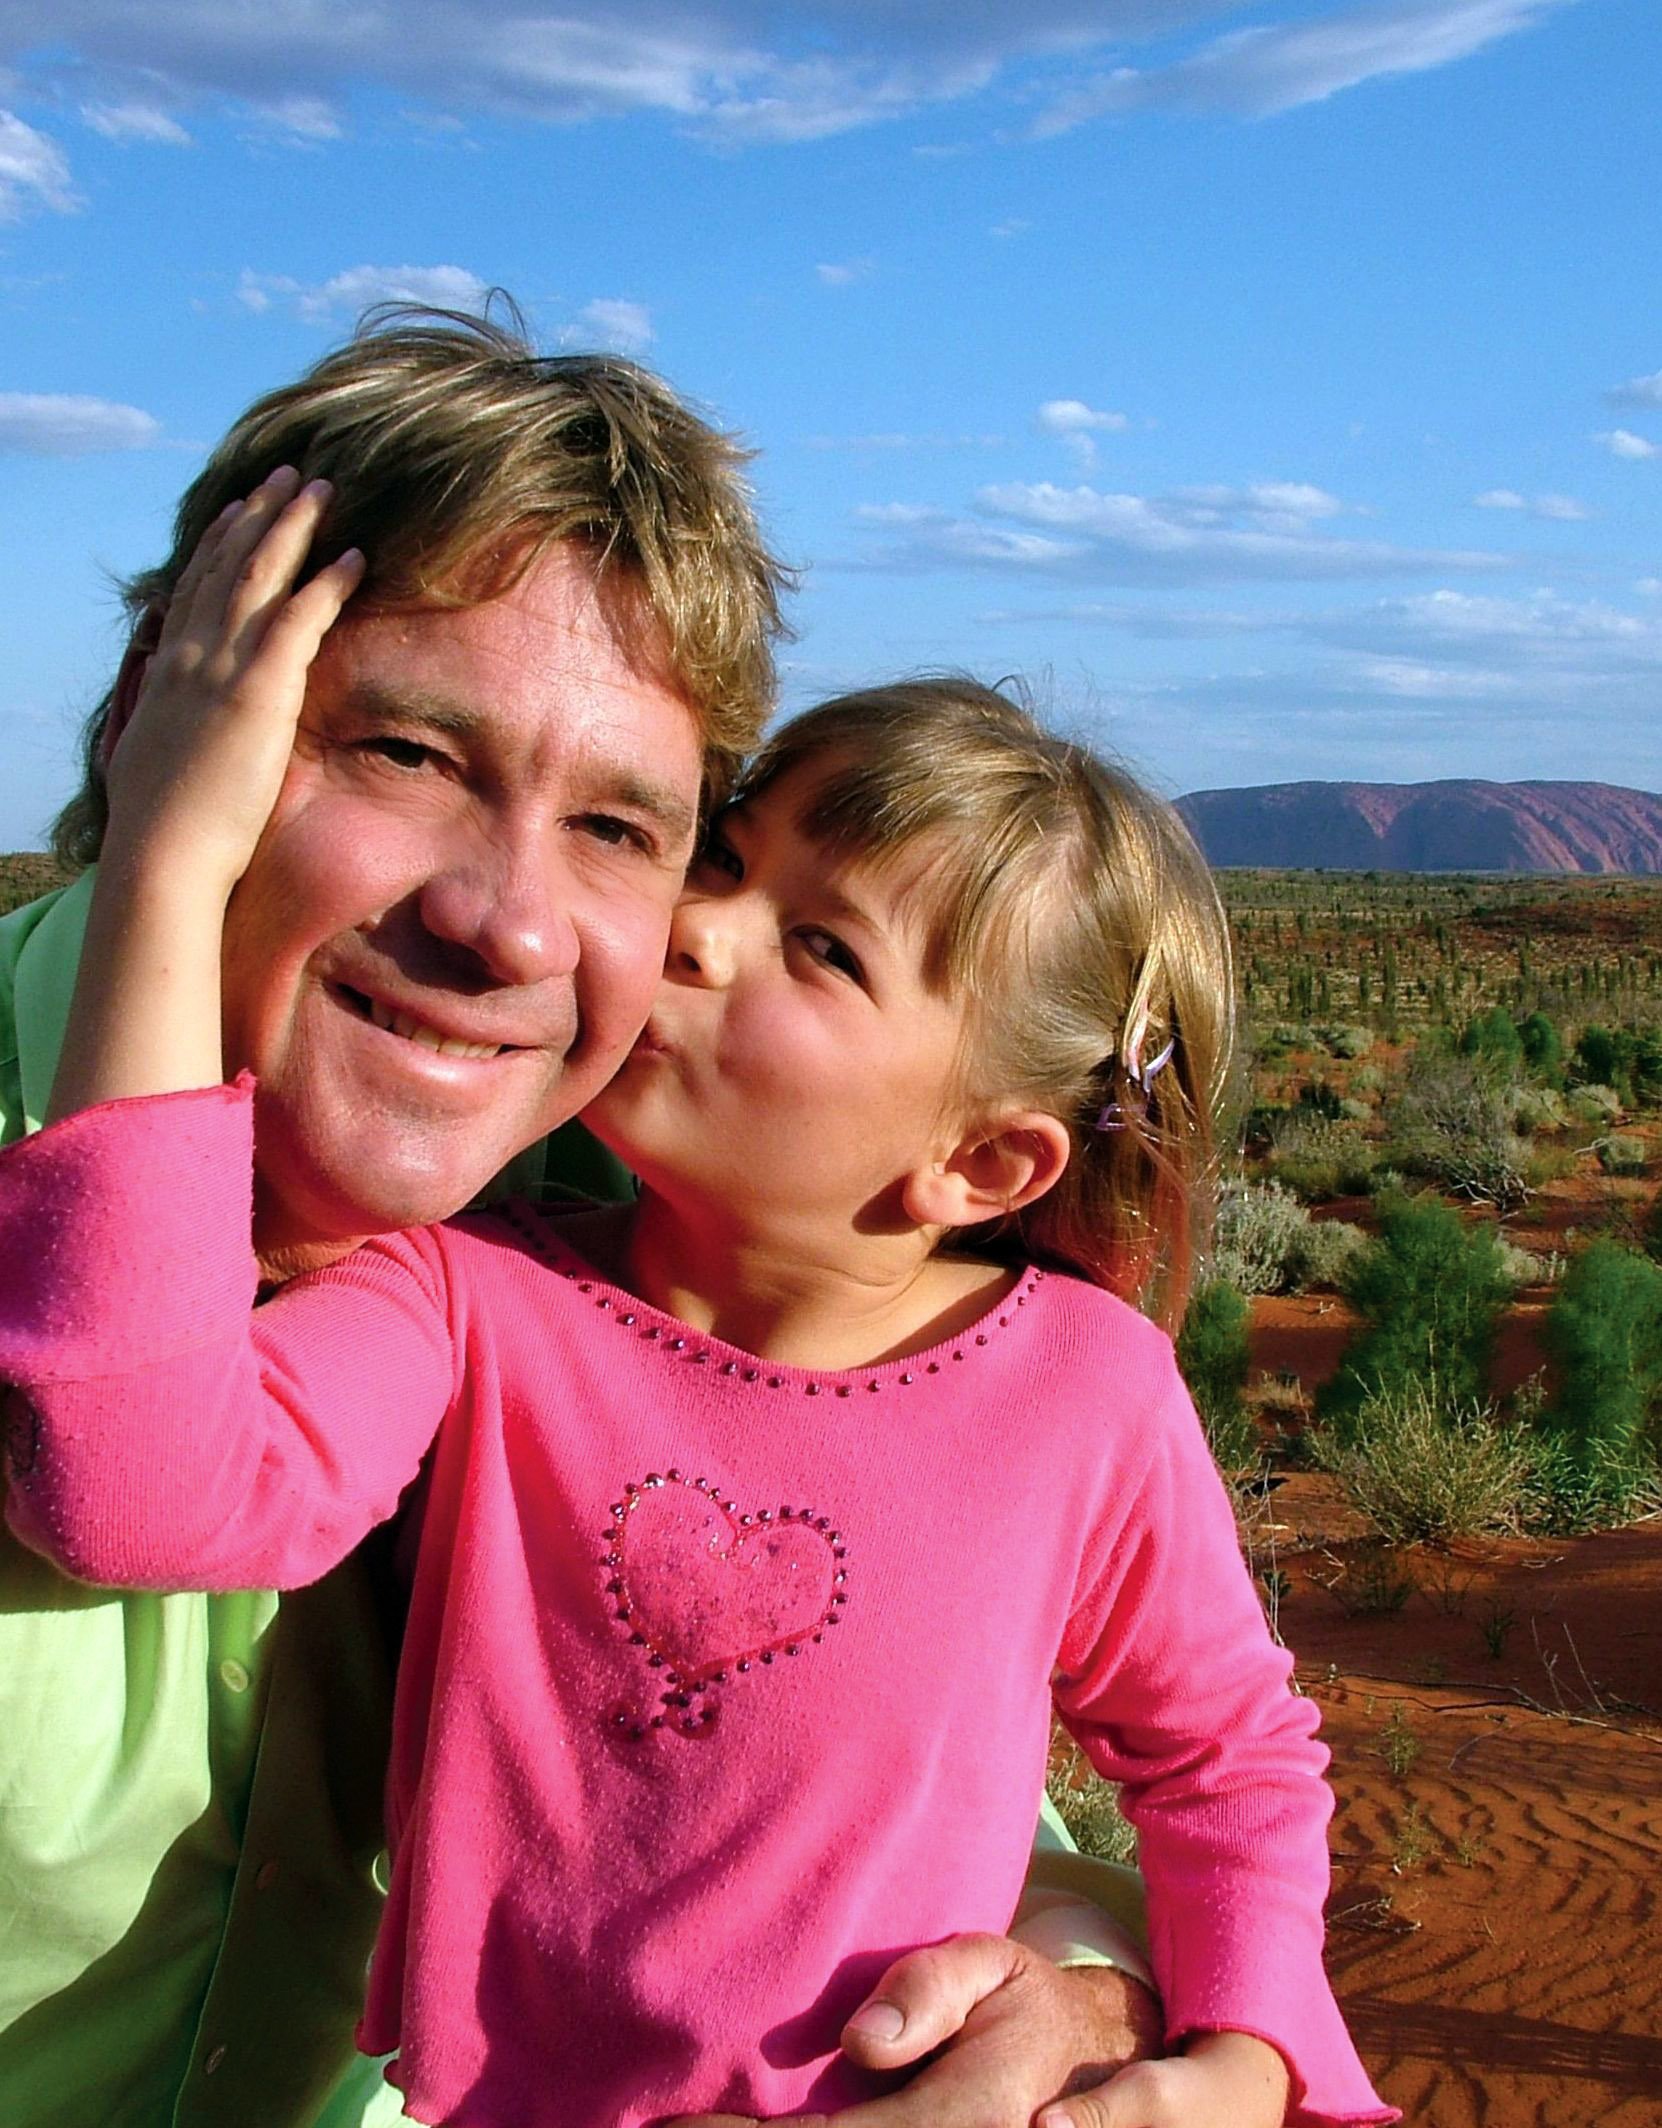 Steve Irwin poses with his daughter, Bindi Irwin, October 2, 2006 in Uluru, Australia. | Source: Getty Images